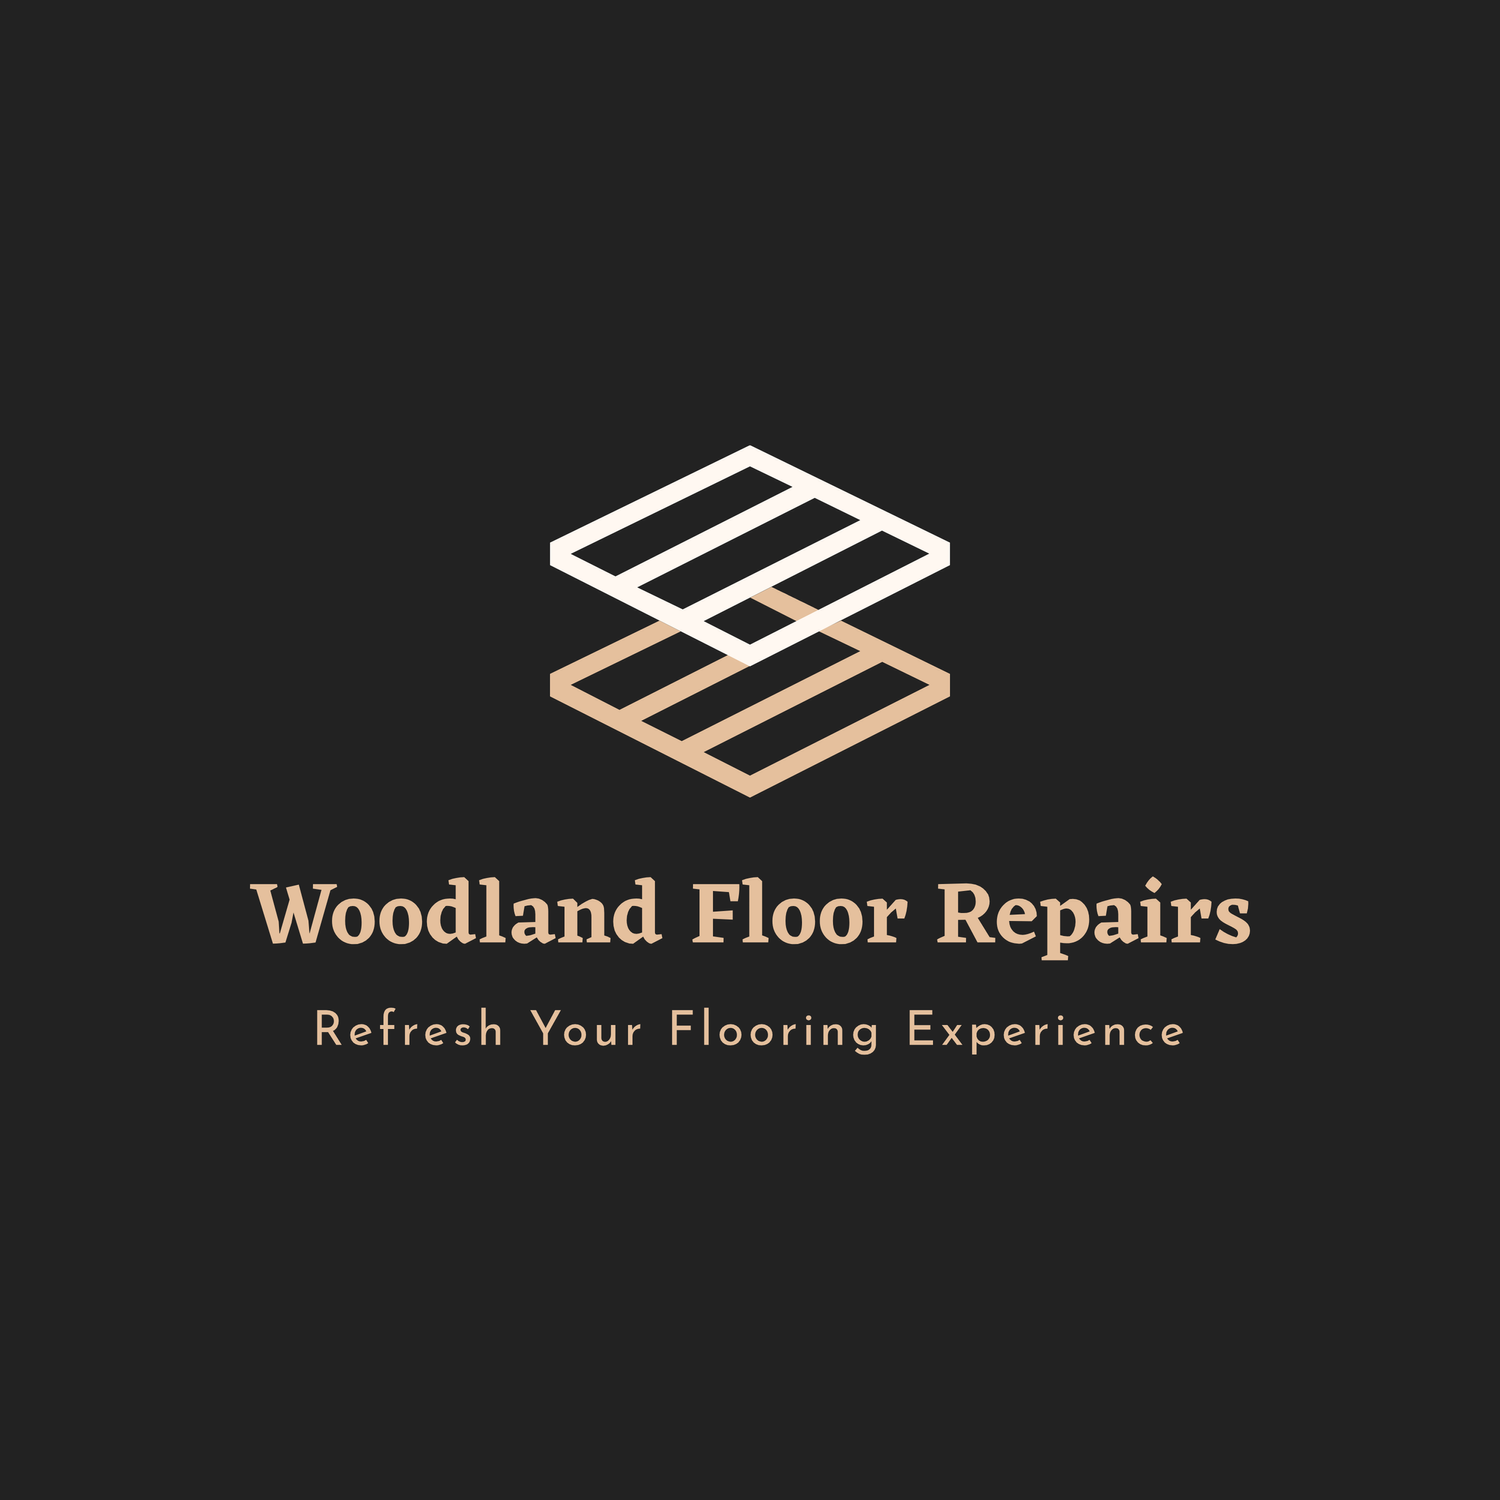 Woodland Floor Repairs